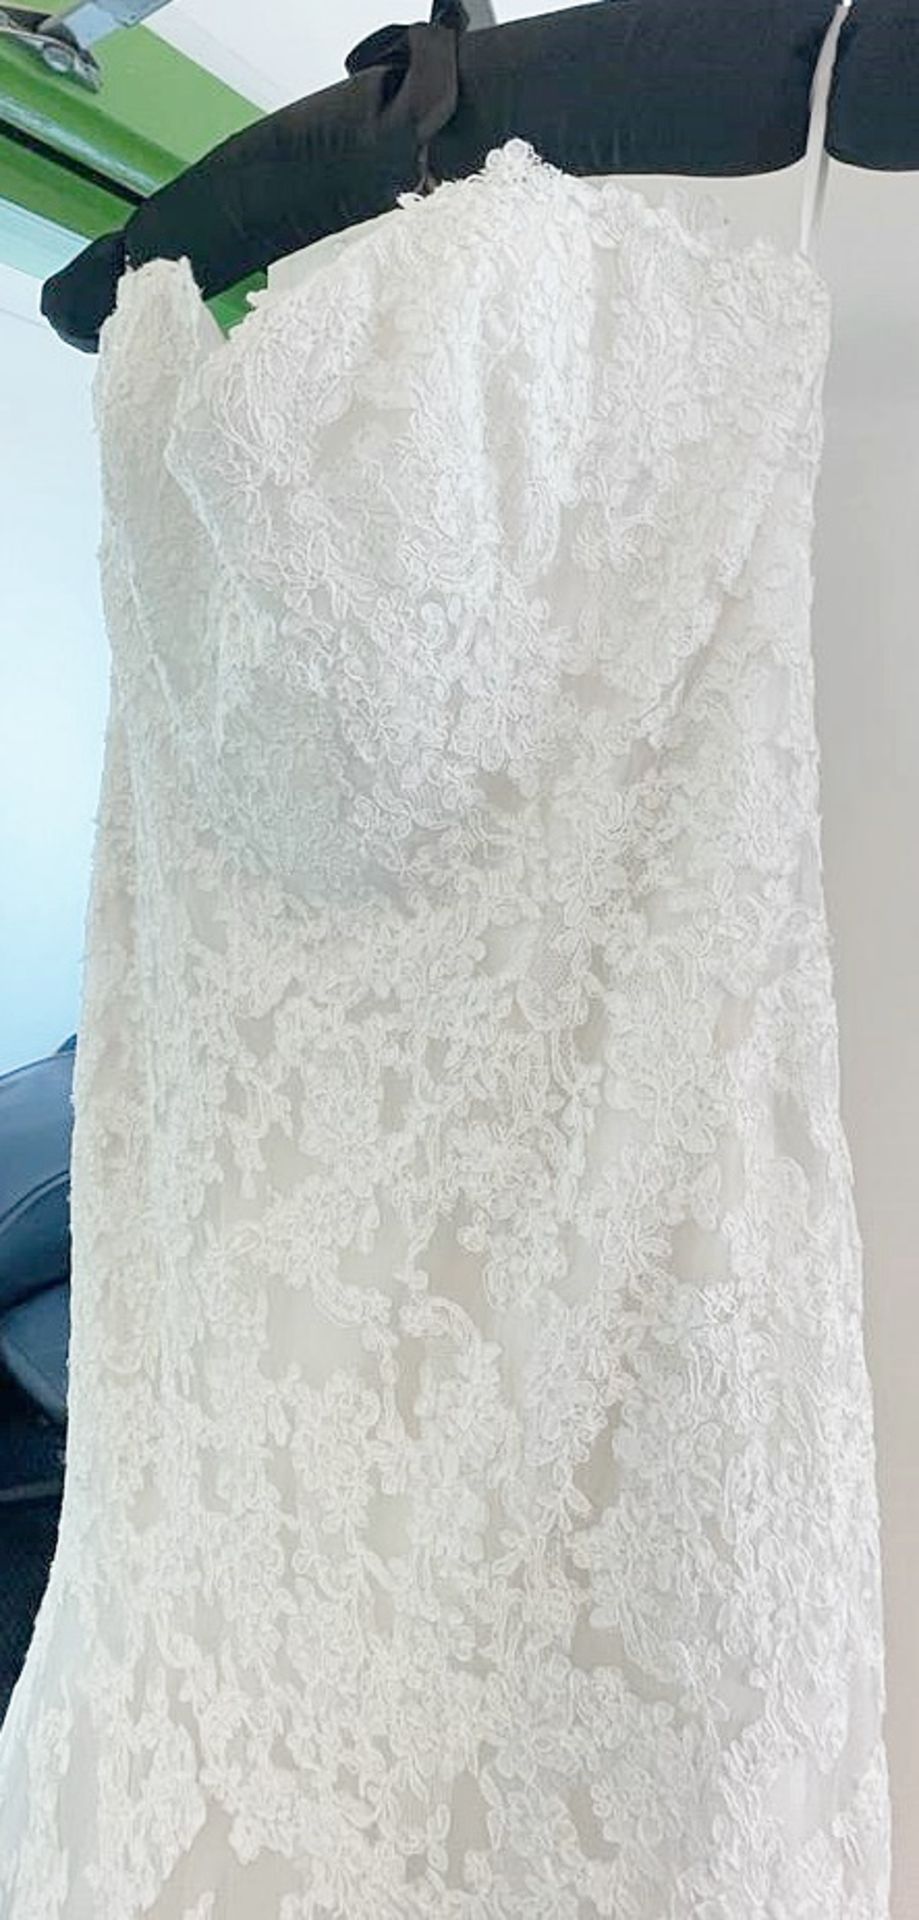 1 x PRONOVIAS 'Olugul' Strapless Mermaid Designer Wedding Dress Bridal Gown - Colour: Ivory - Image 5 of 10